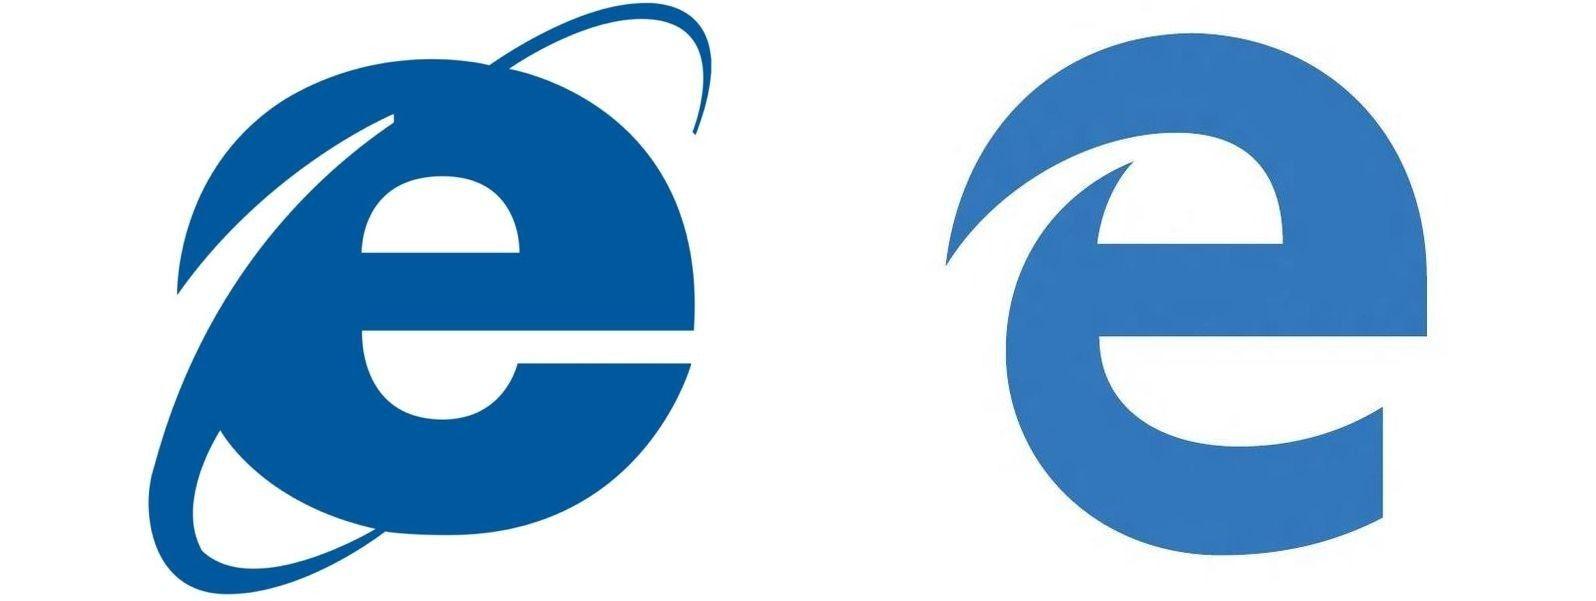 Microsoft IE Logo - The logo for the Microsoft Edge web browser looks very familiar ...